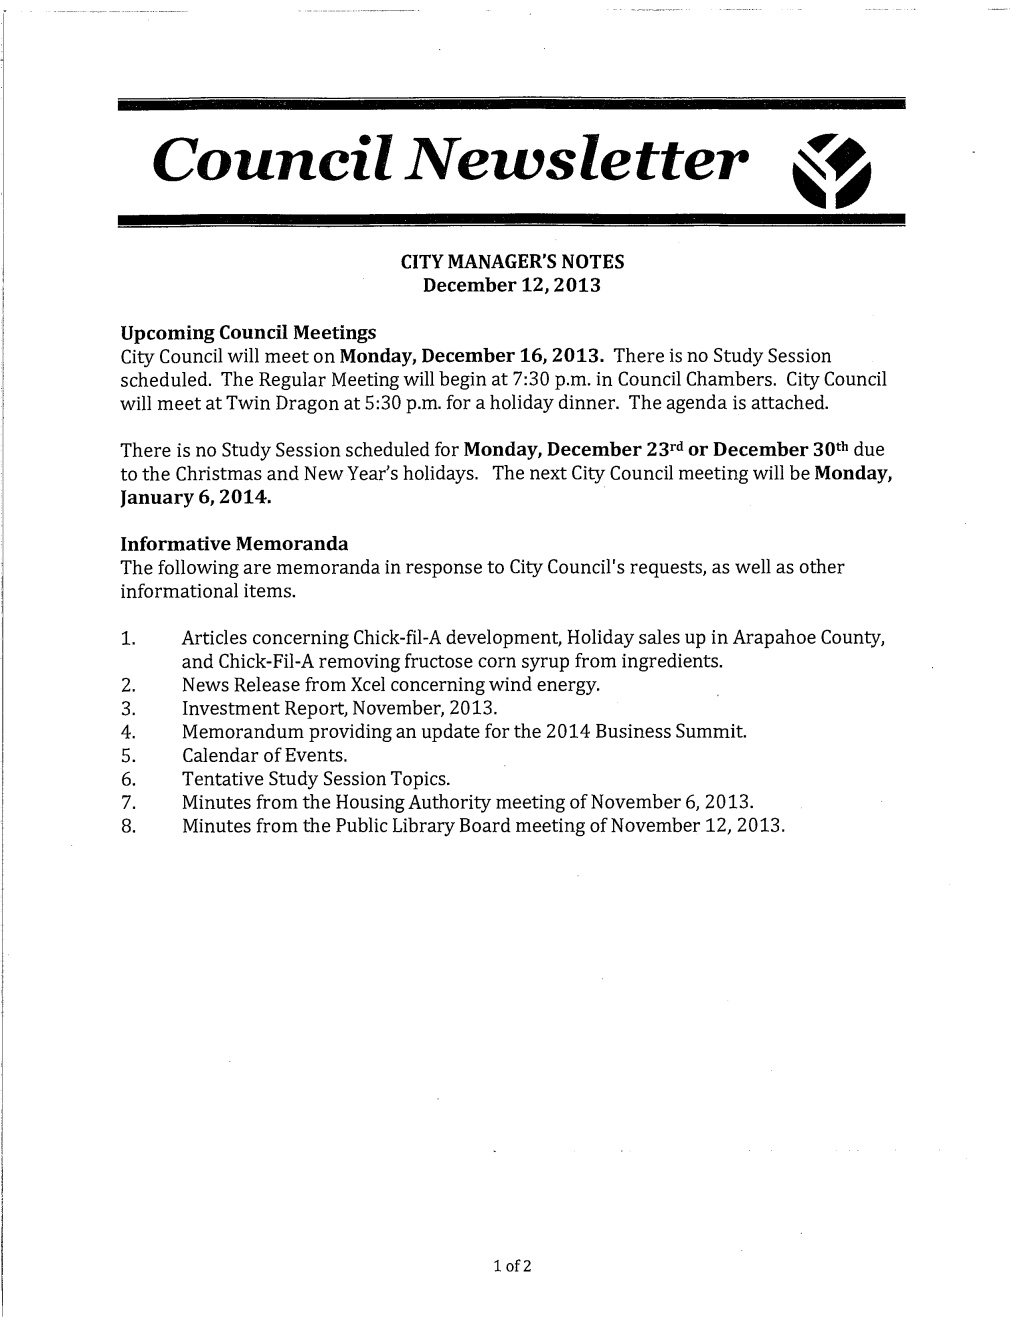 Council Newsletter